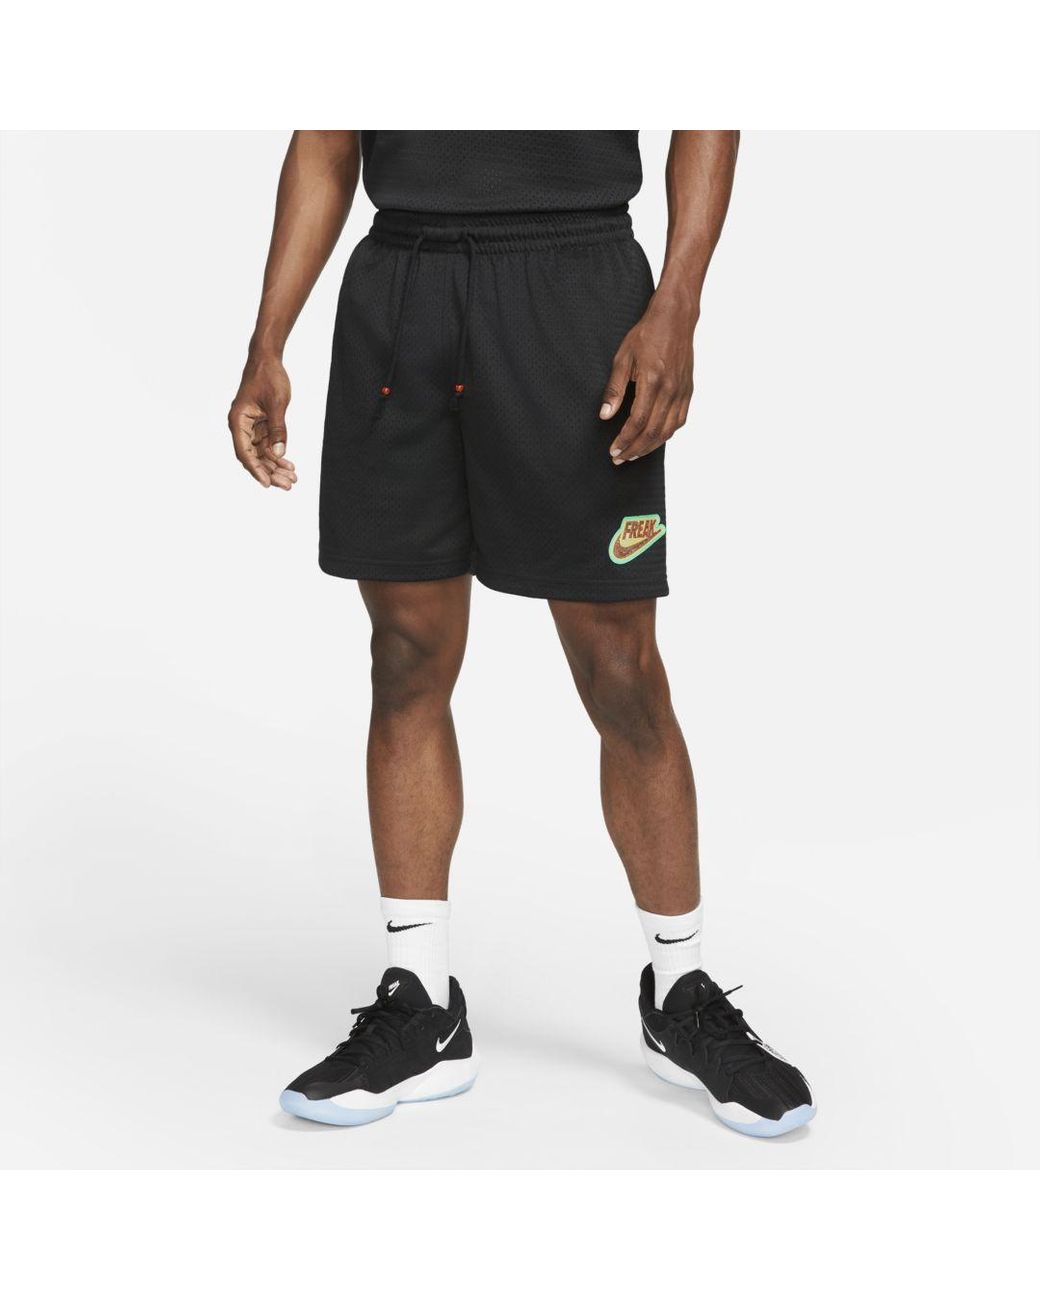 Nike Giannis Mesh Basketball Shorts in Black | Lyst